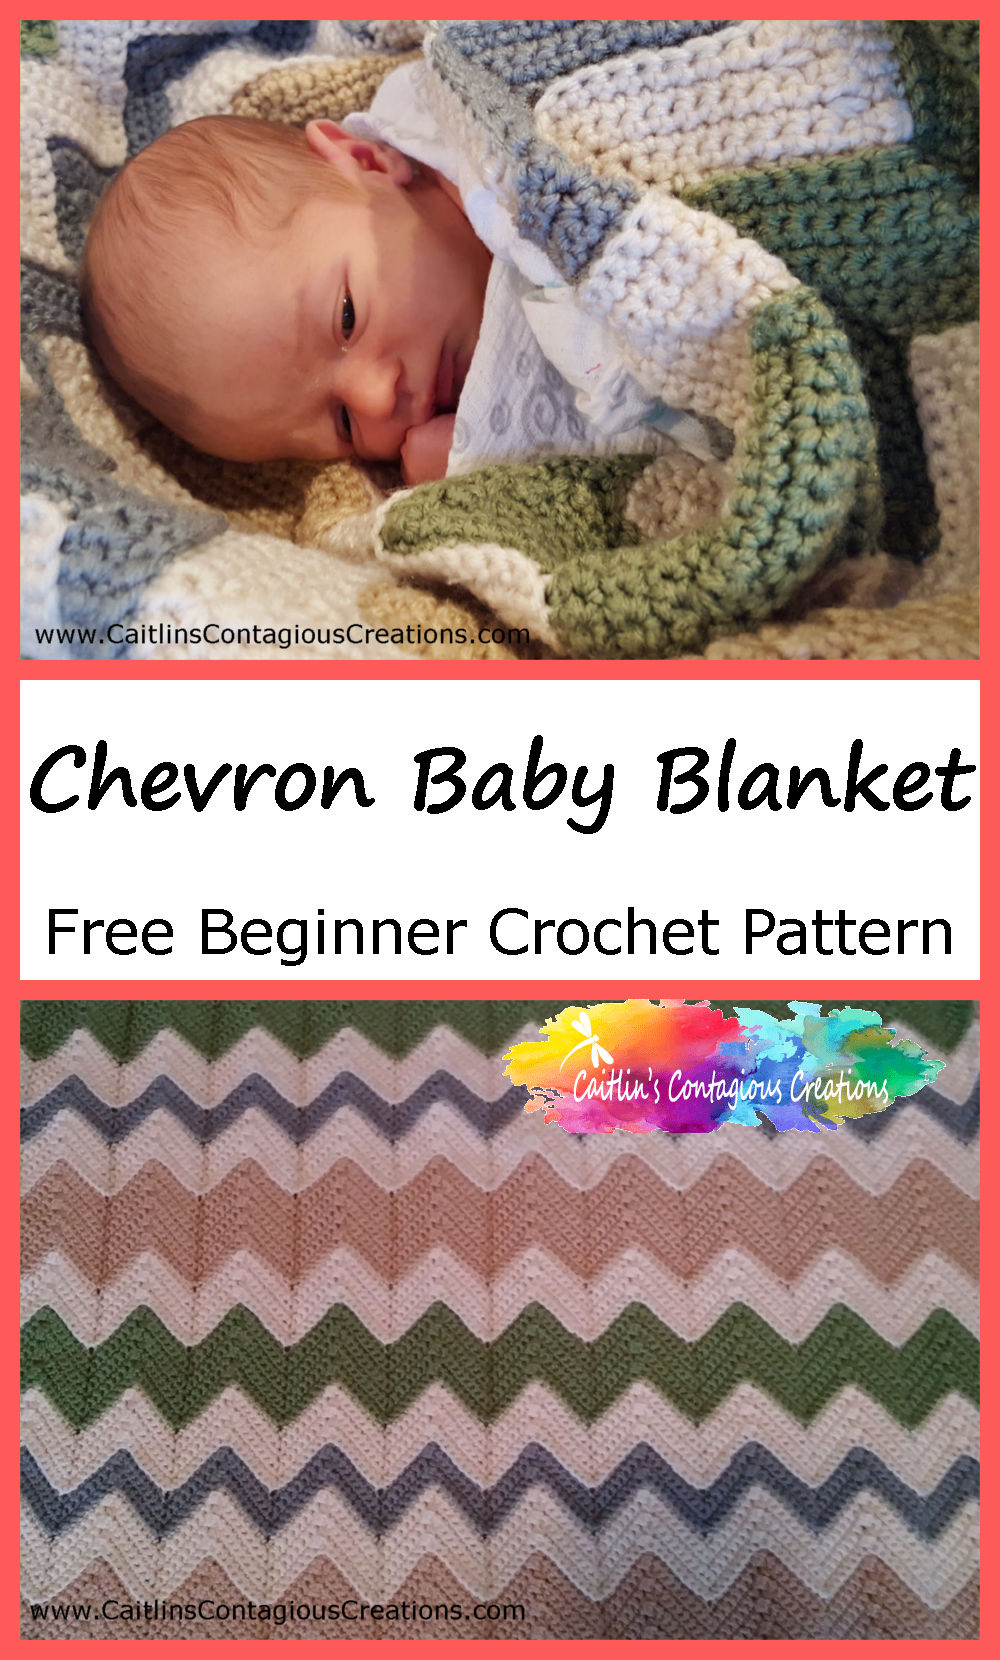 Gender-Neutral-Crochet-Baby-Blanket-Chevron-Design